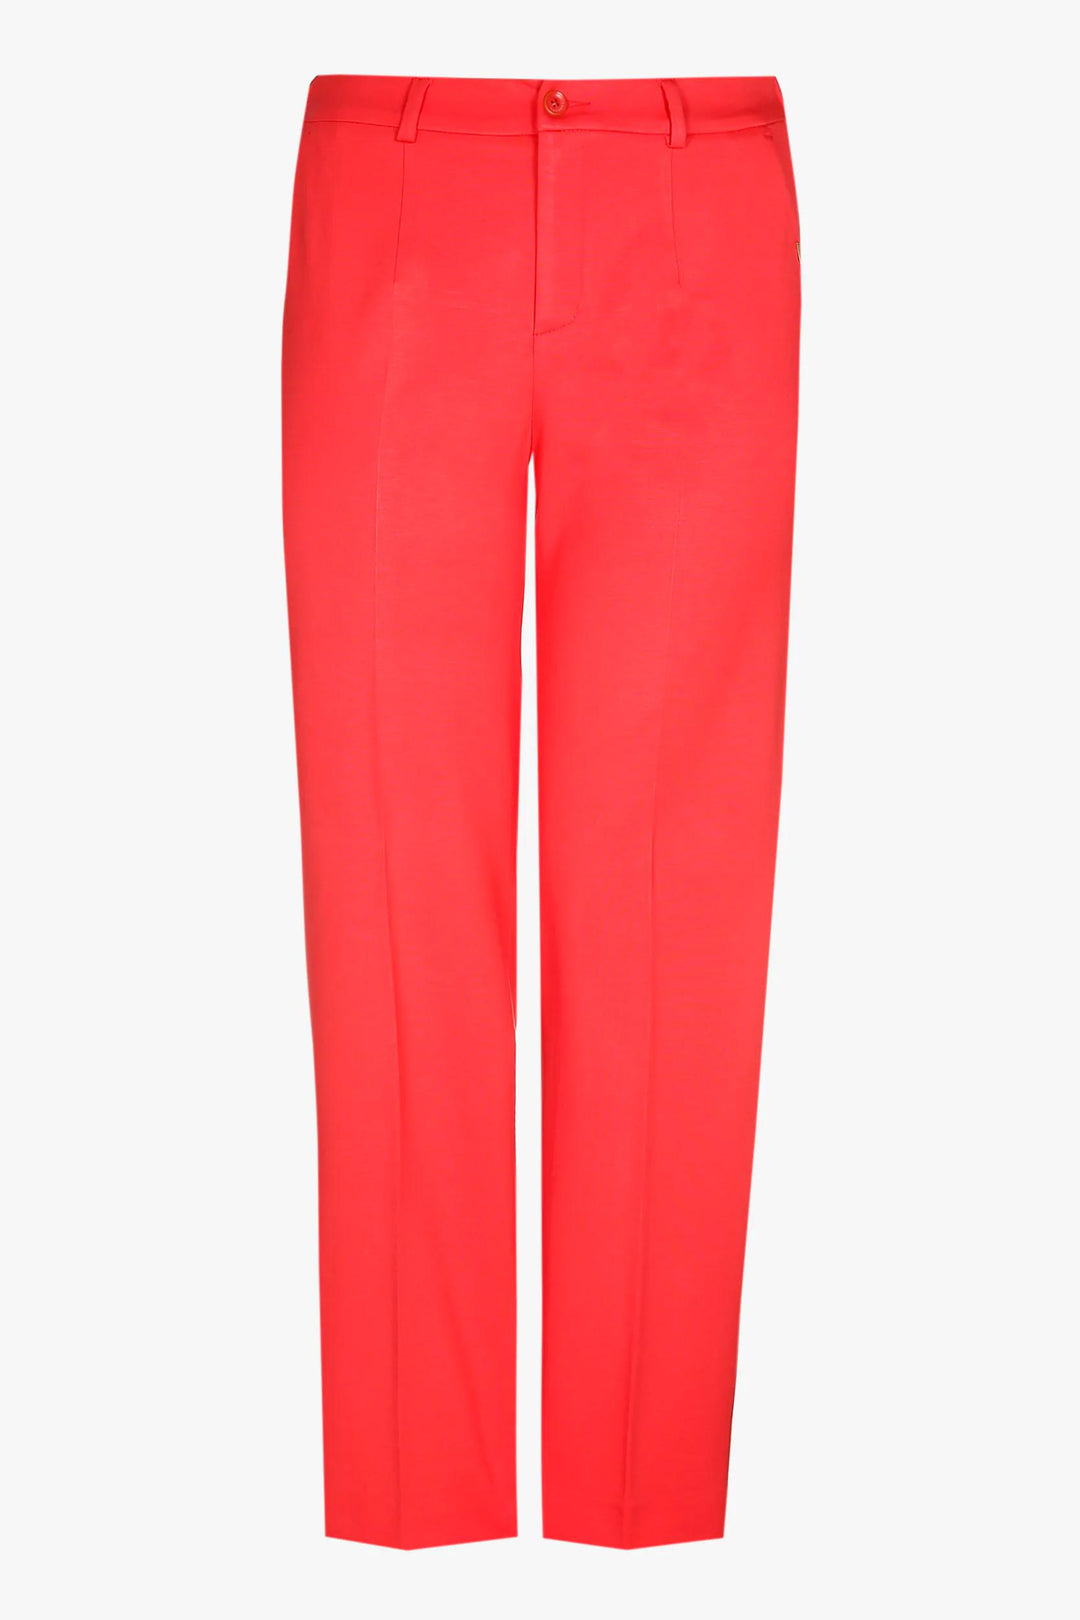 rode broek met zachte touch - xandres - - grote maten - dameskleding - kledingwinkel - herent - leuven